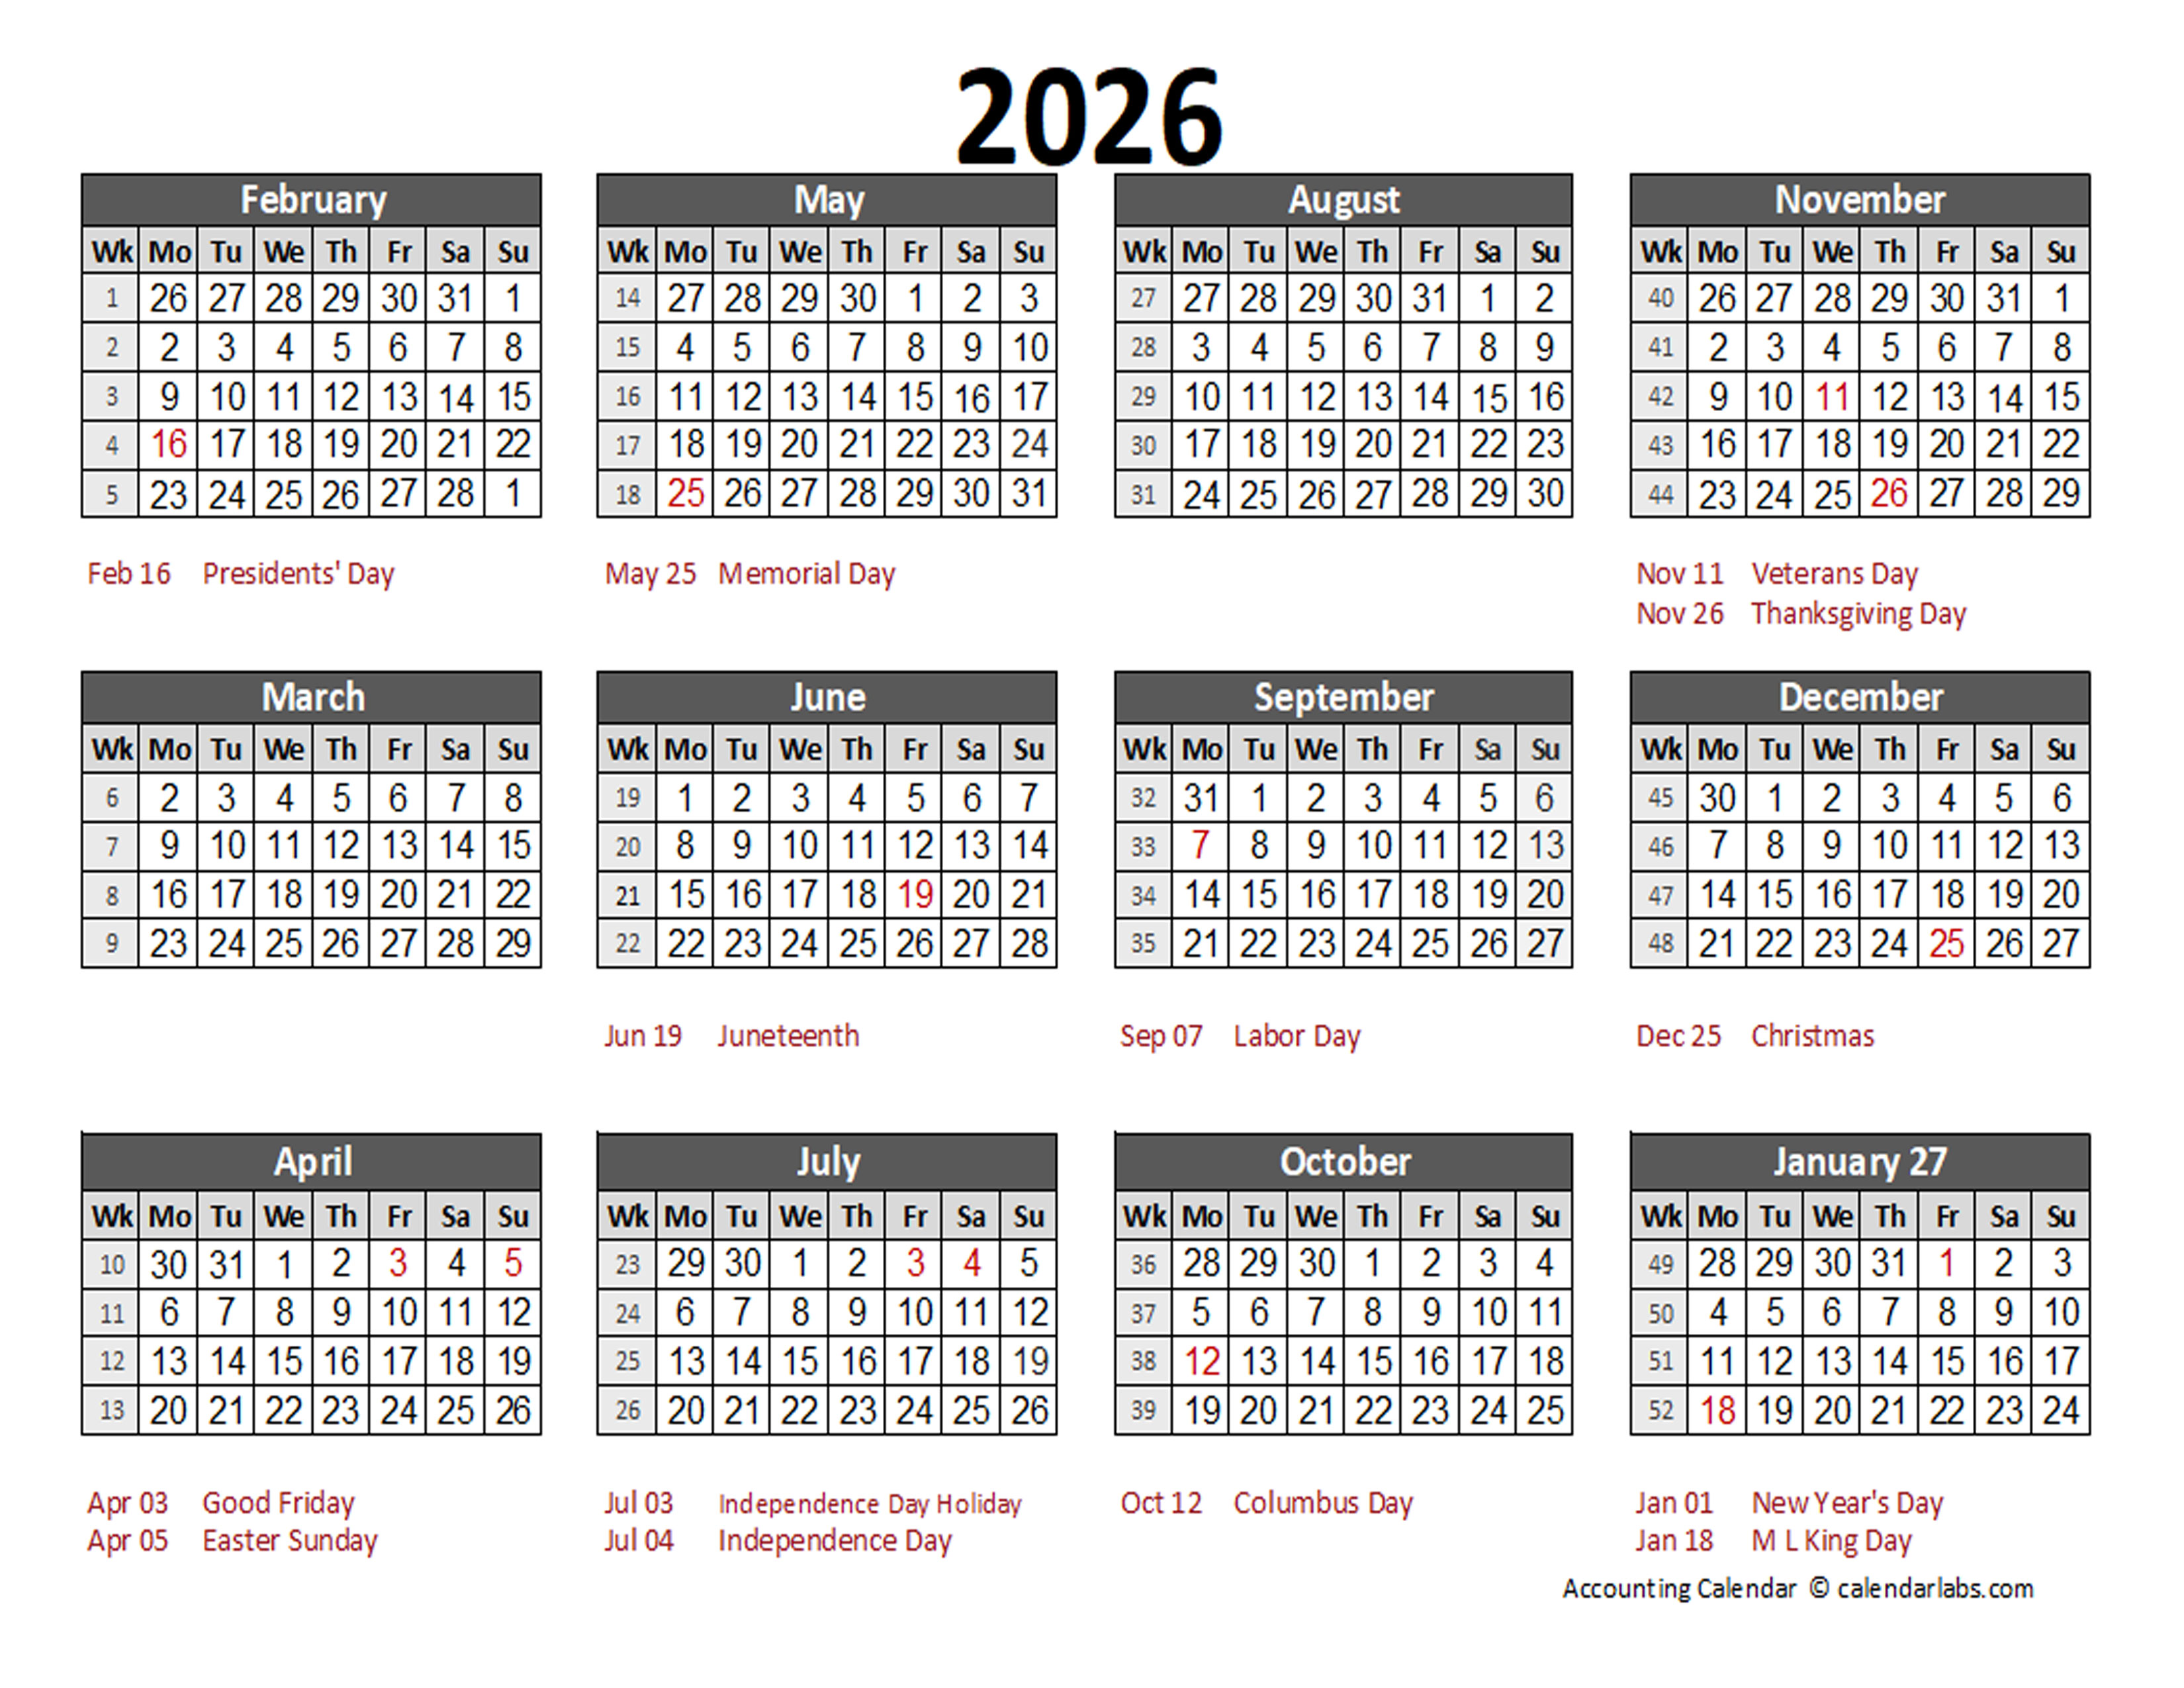 2026 Accounting Calendar 5-4-4 - Free Printable Templates